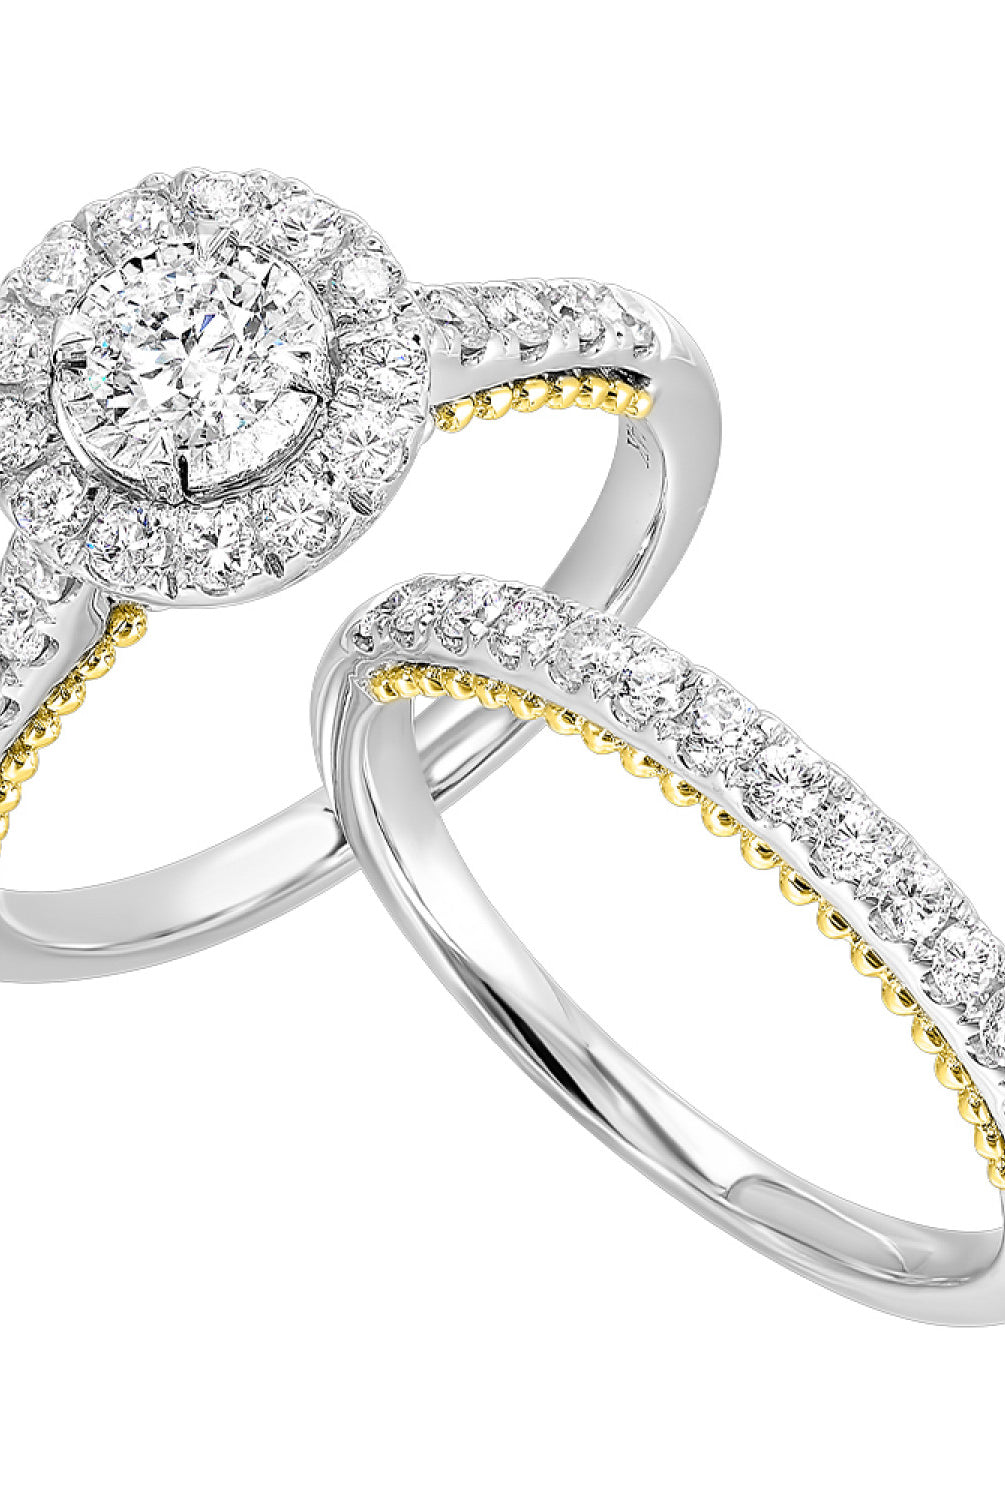 14KW Round Halo Style Diamond Engagement Ring and Matching Wedding Band